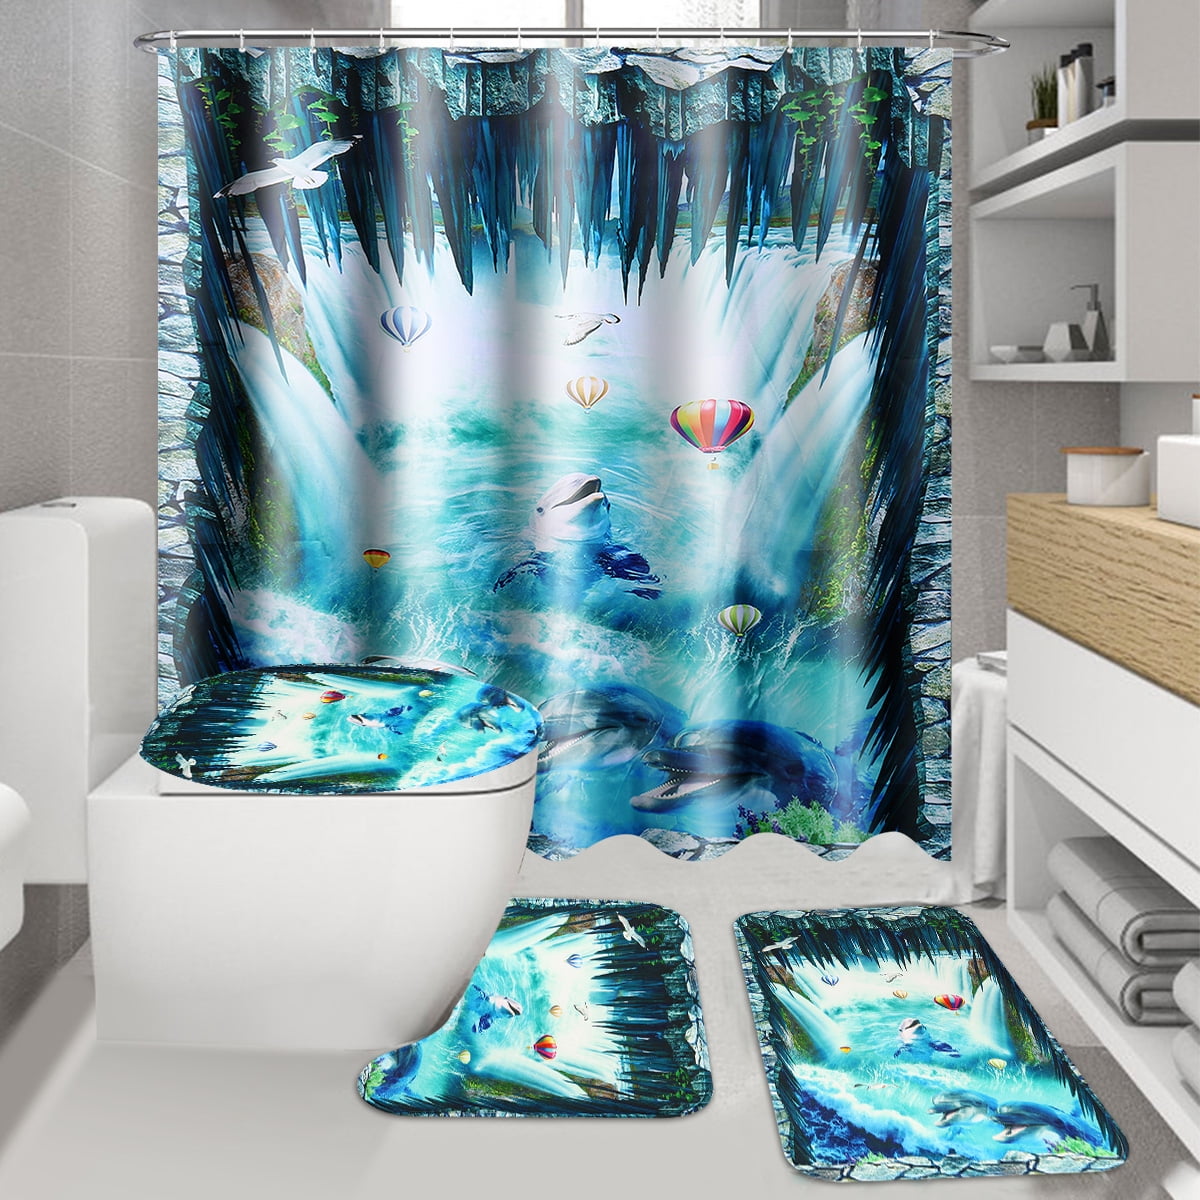 Shower head Bathroom Shower Curtain Waterproof Fabric w/12 Hooks 71*71inch new 